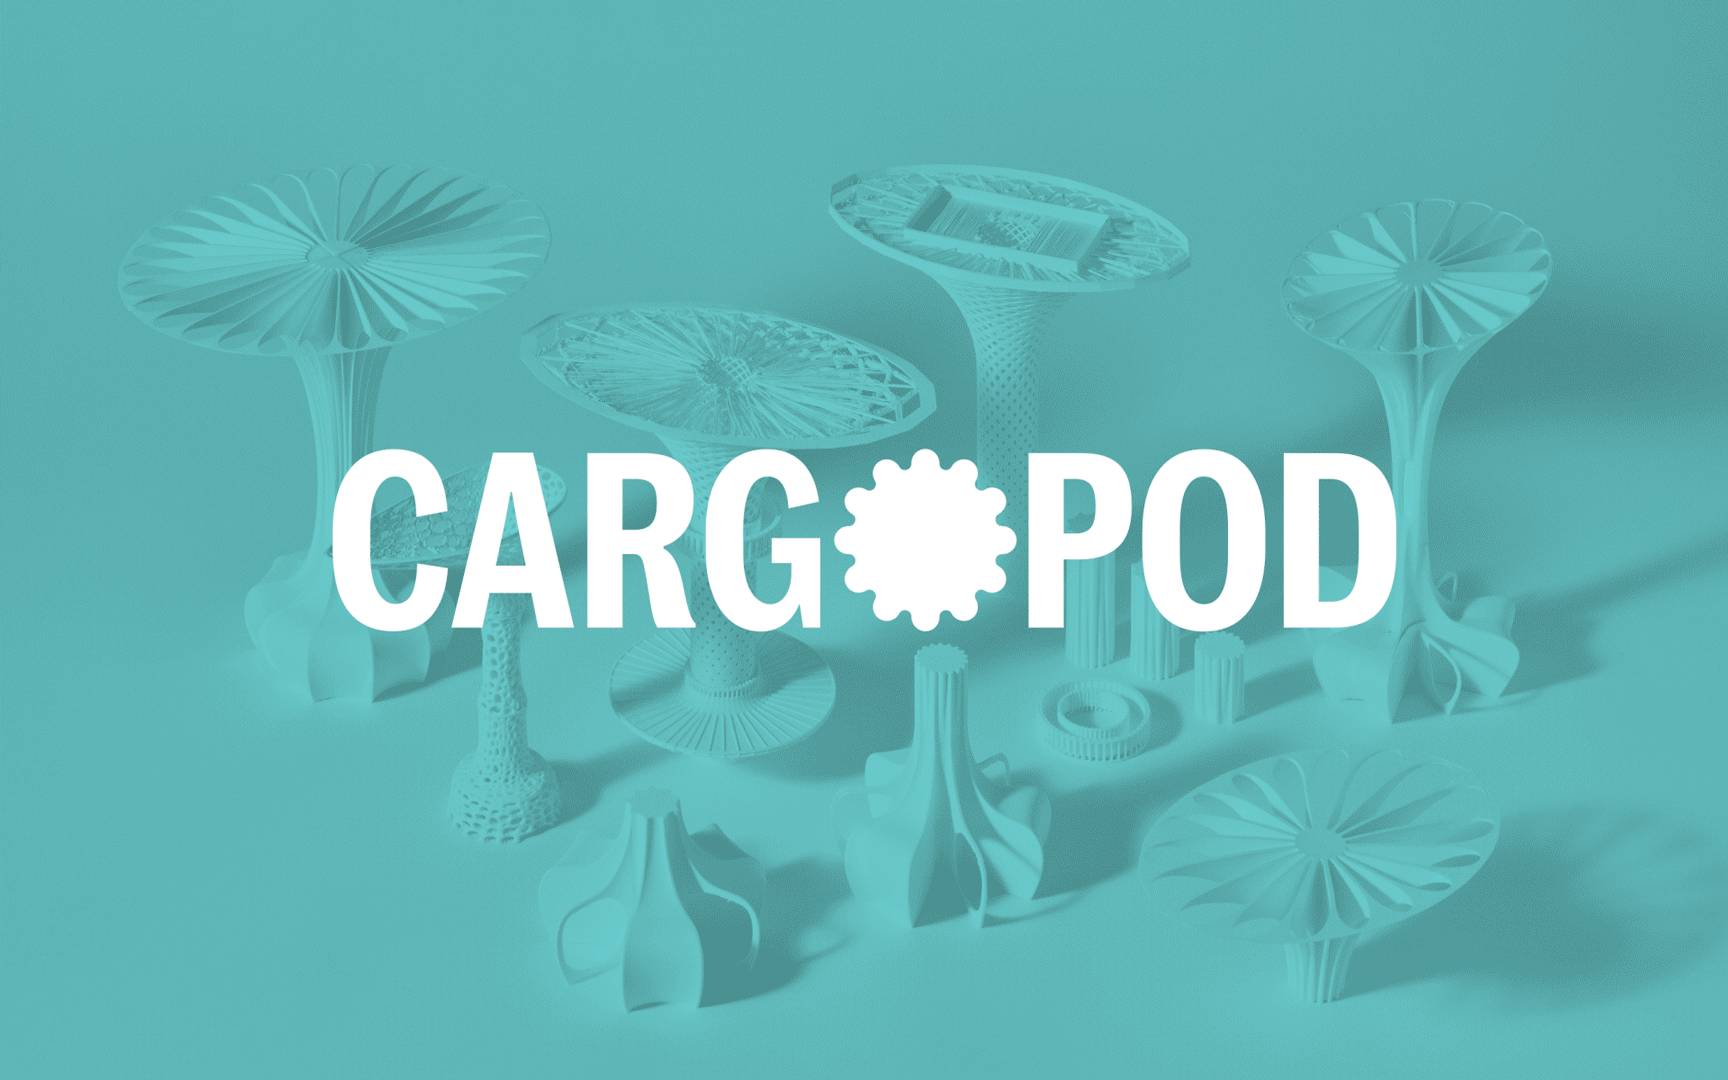 Spotlight: Cargopods